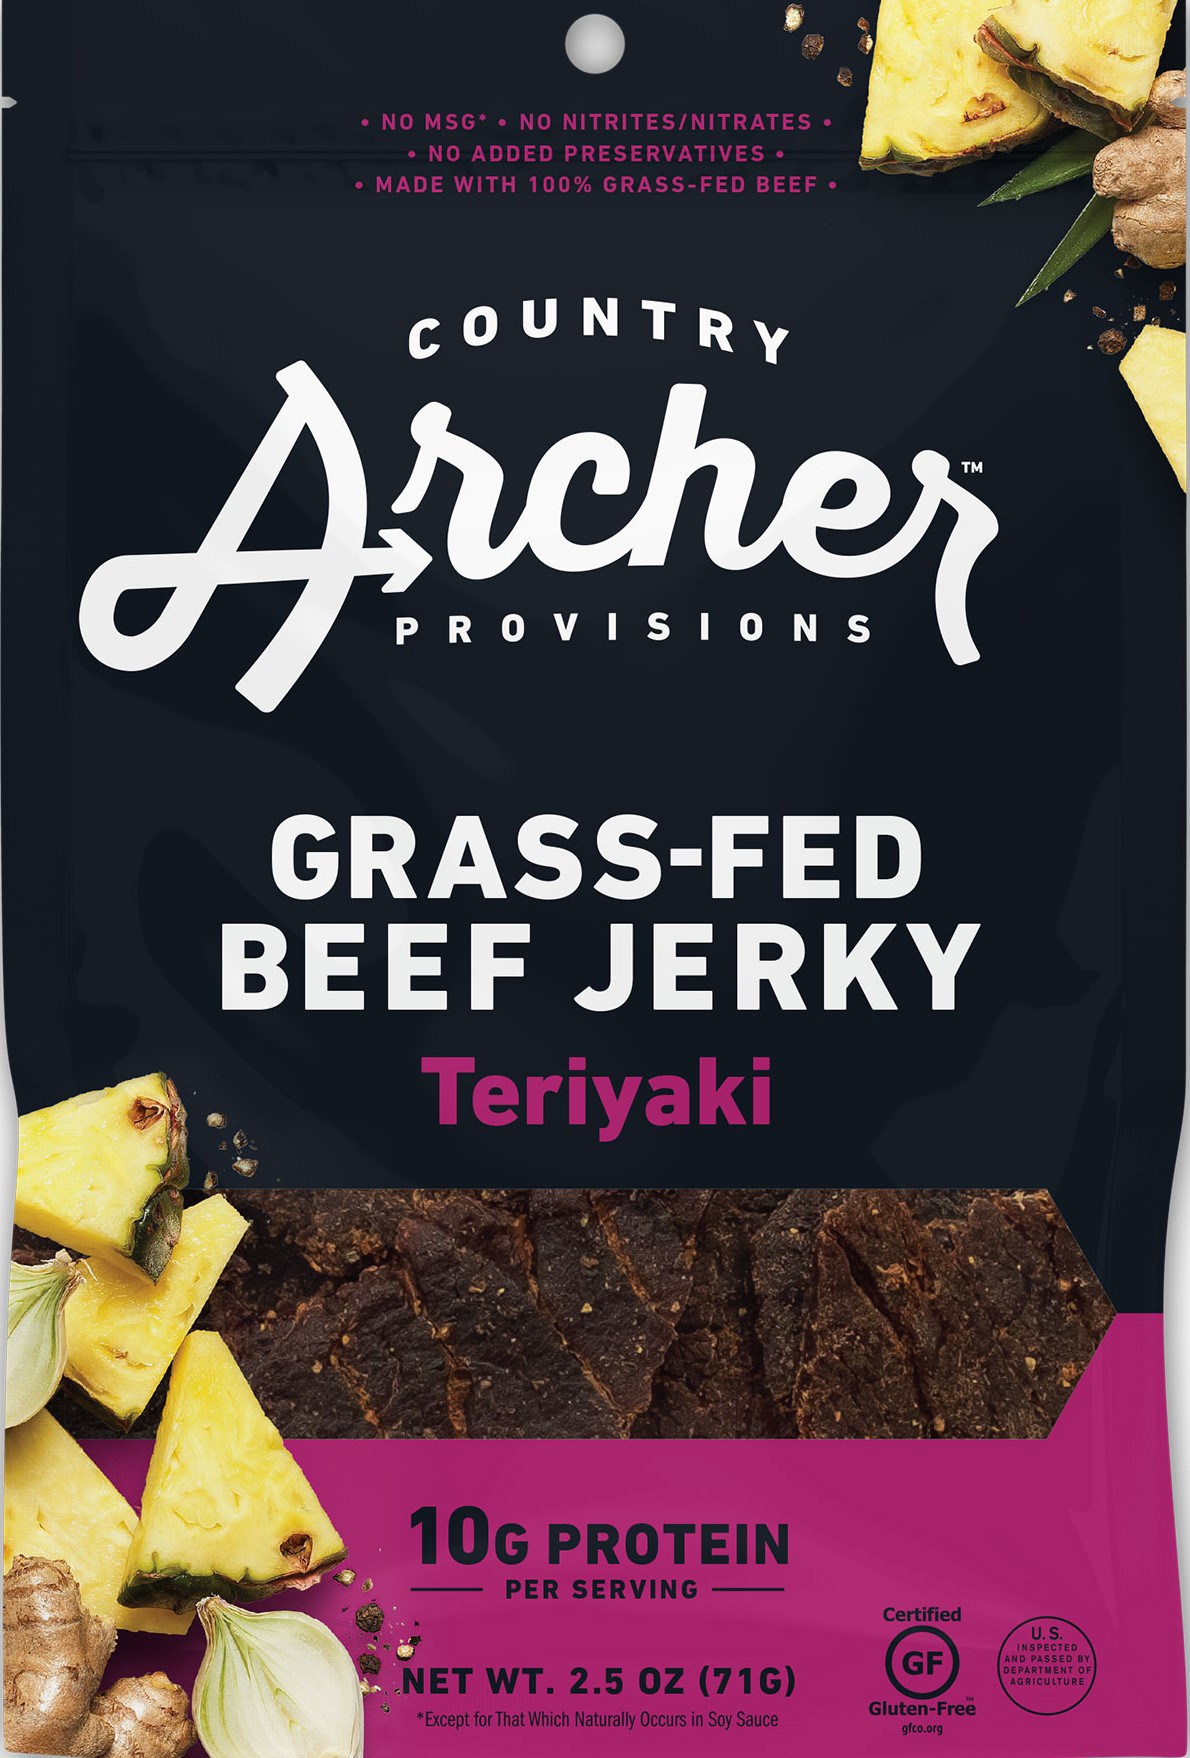 Вяленое мясо - 2,5 унции. Country Archer Jerky Co. country archer jerky вяленое мясо травяного откорма оригинальное 71 г 2 5 унции